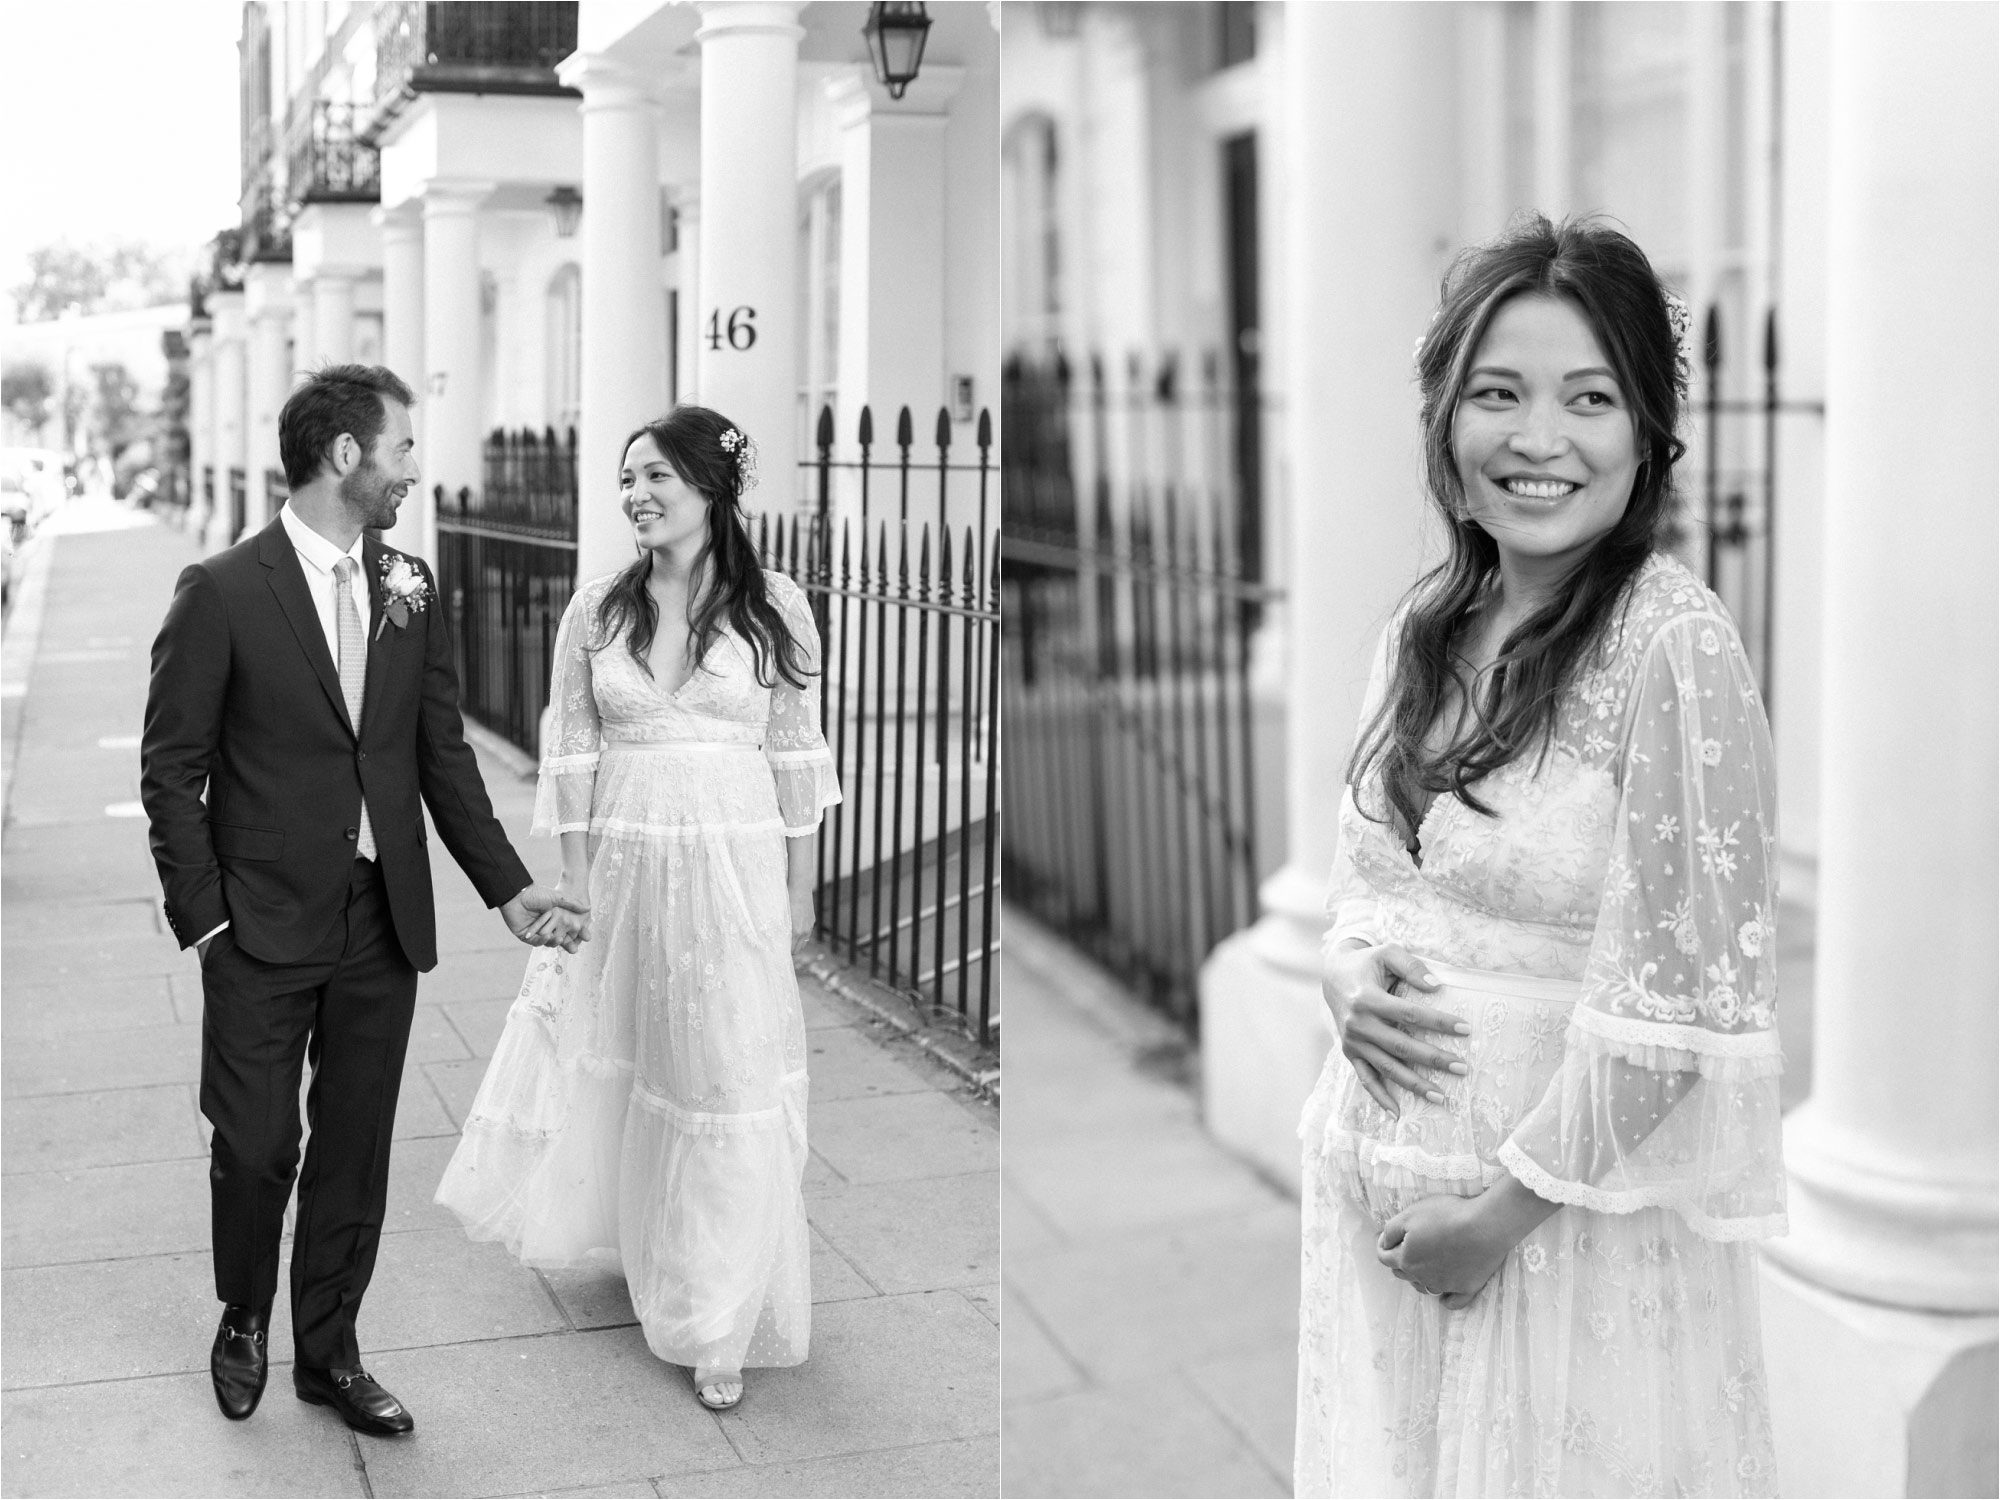 London micro-wedding photographer